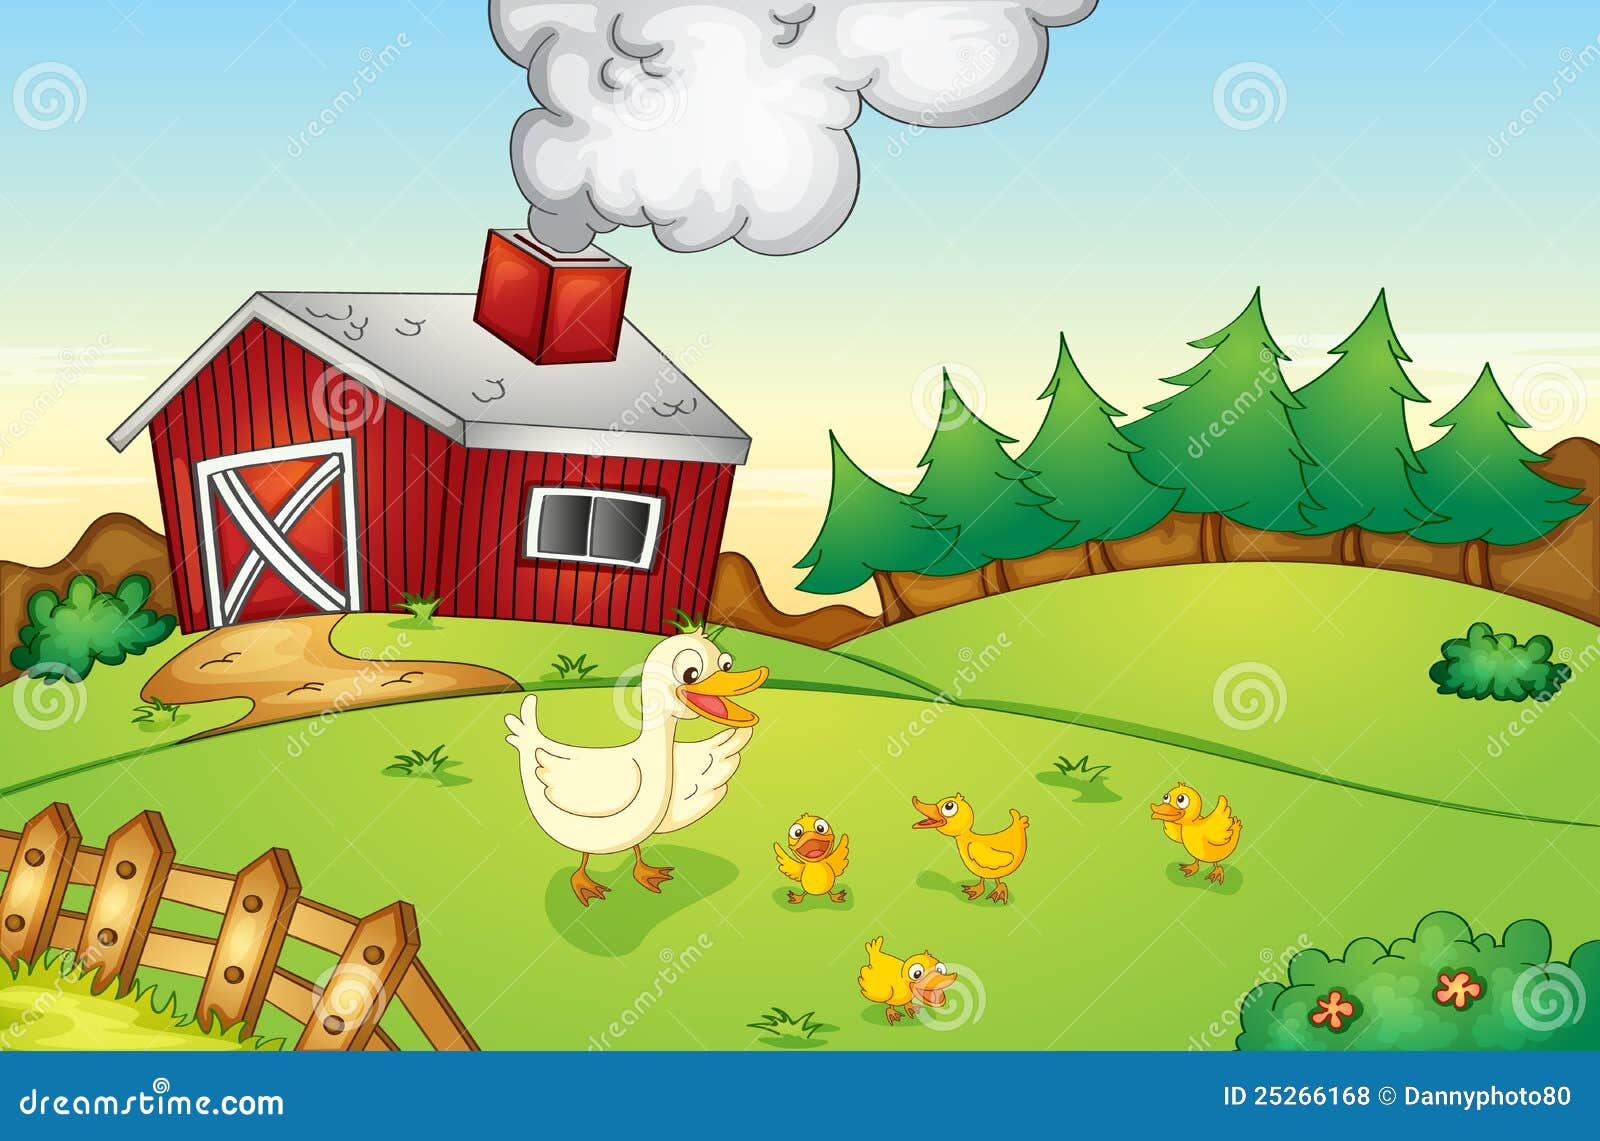 clip art illustrations farmhouse - photo #23